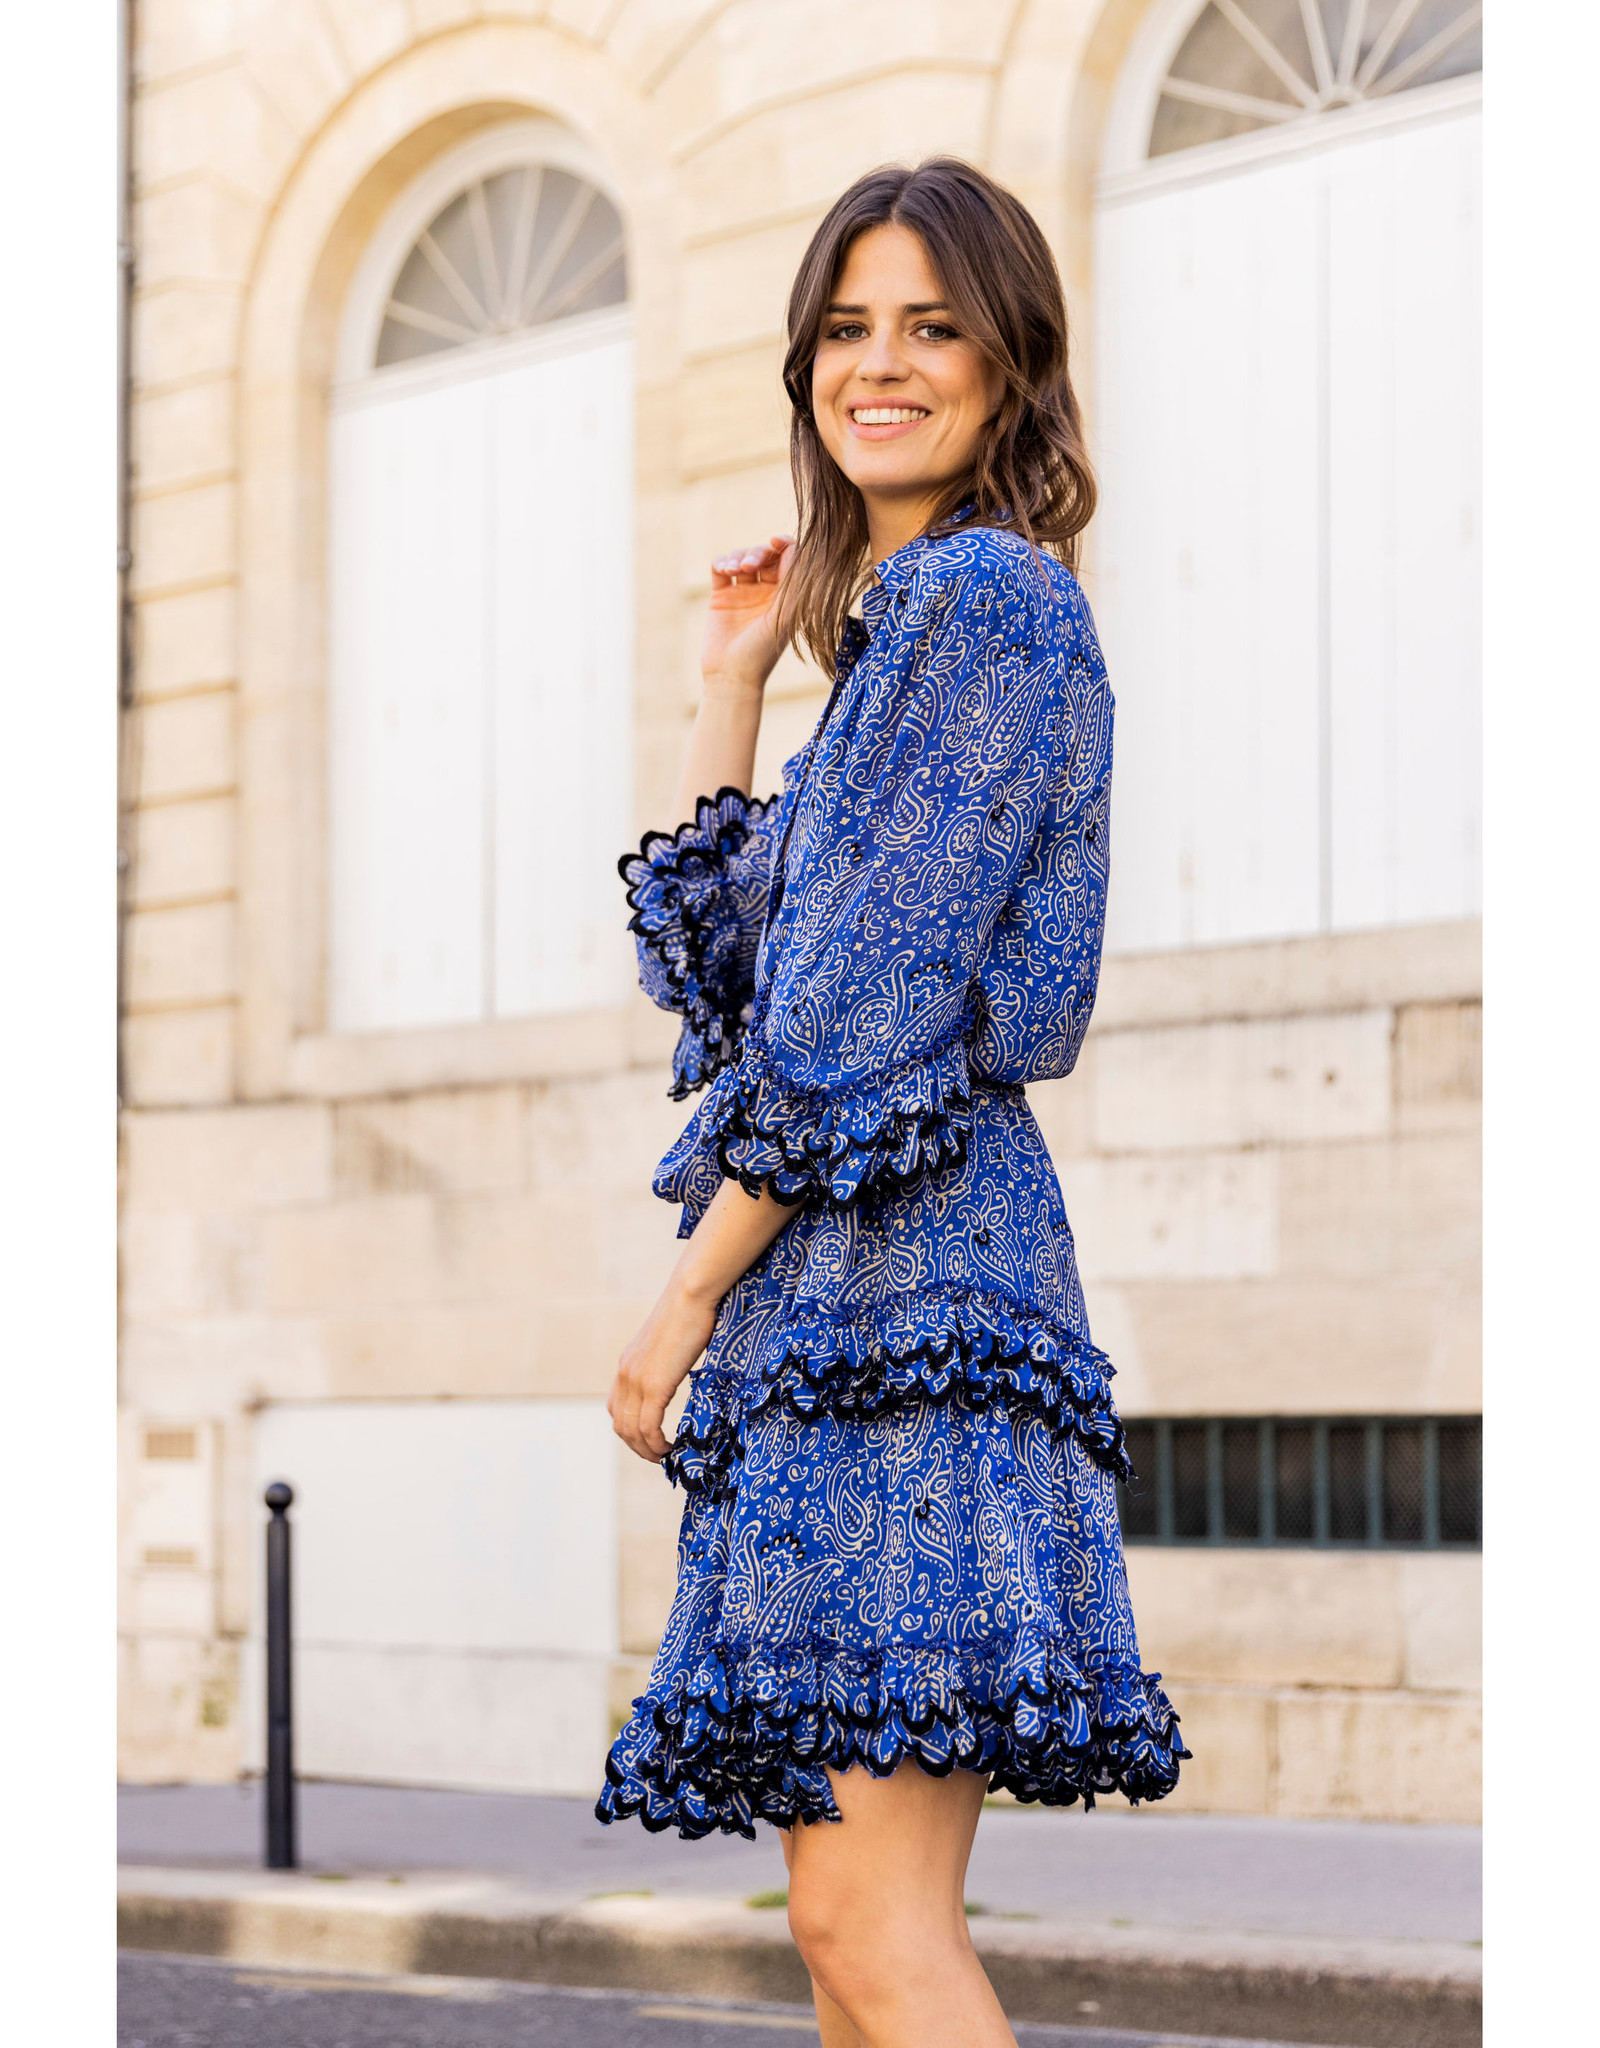 MISS JUNE PARIS ANGELICA DRESS  BLUE - B62